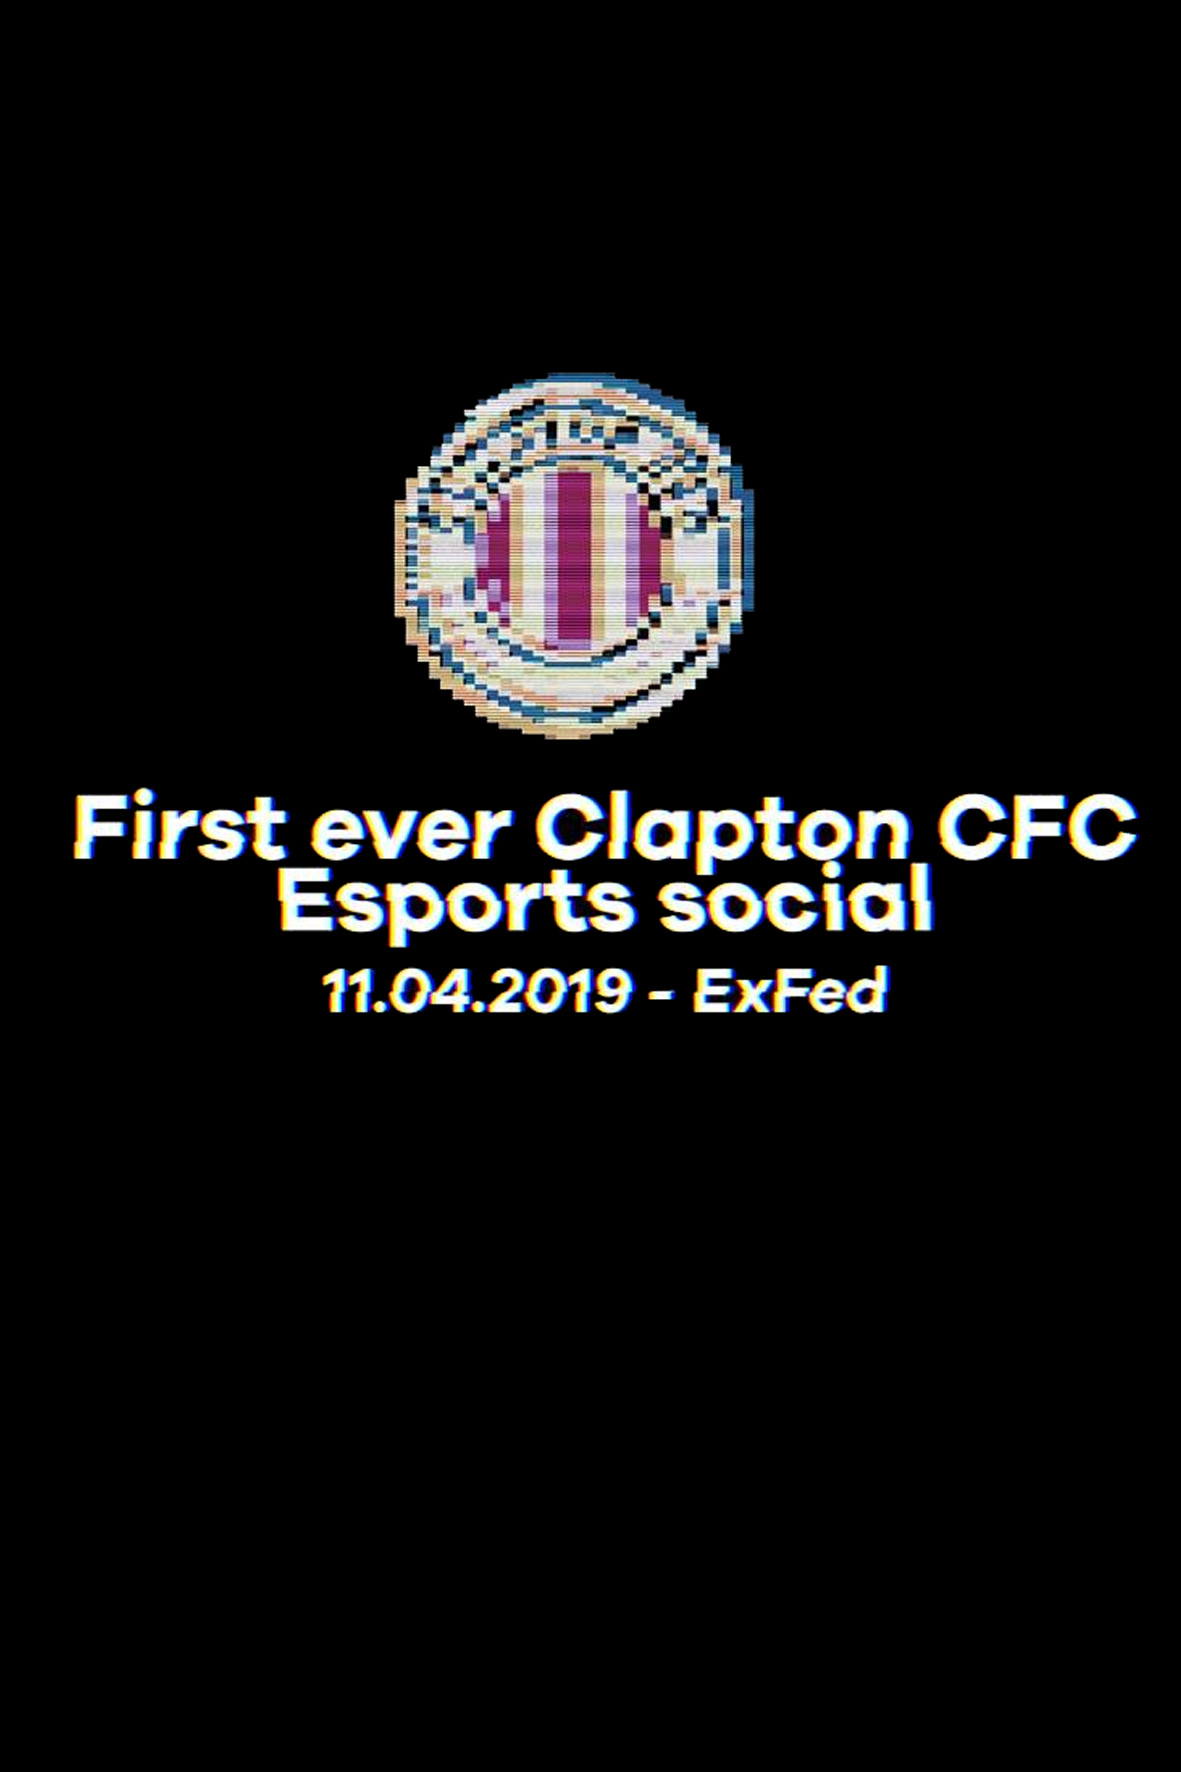 First ever Clapton CFC Esports social - April 11th